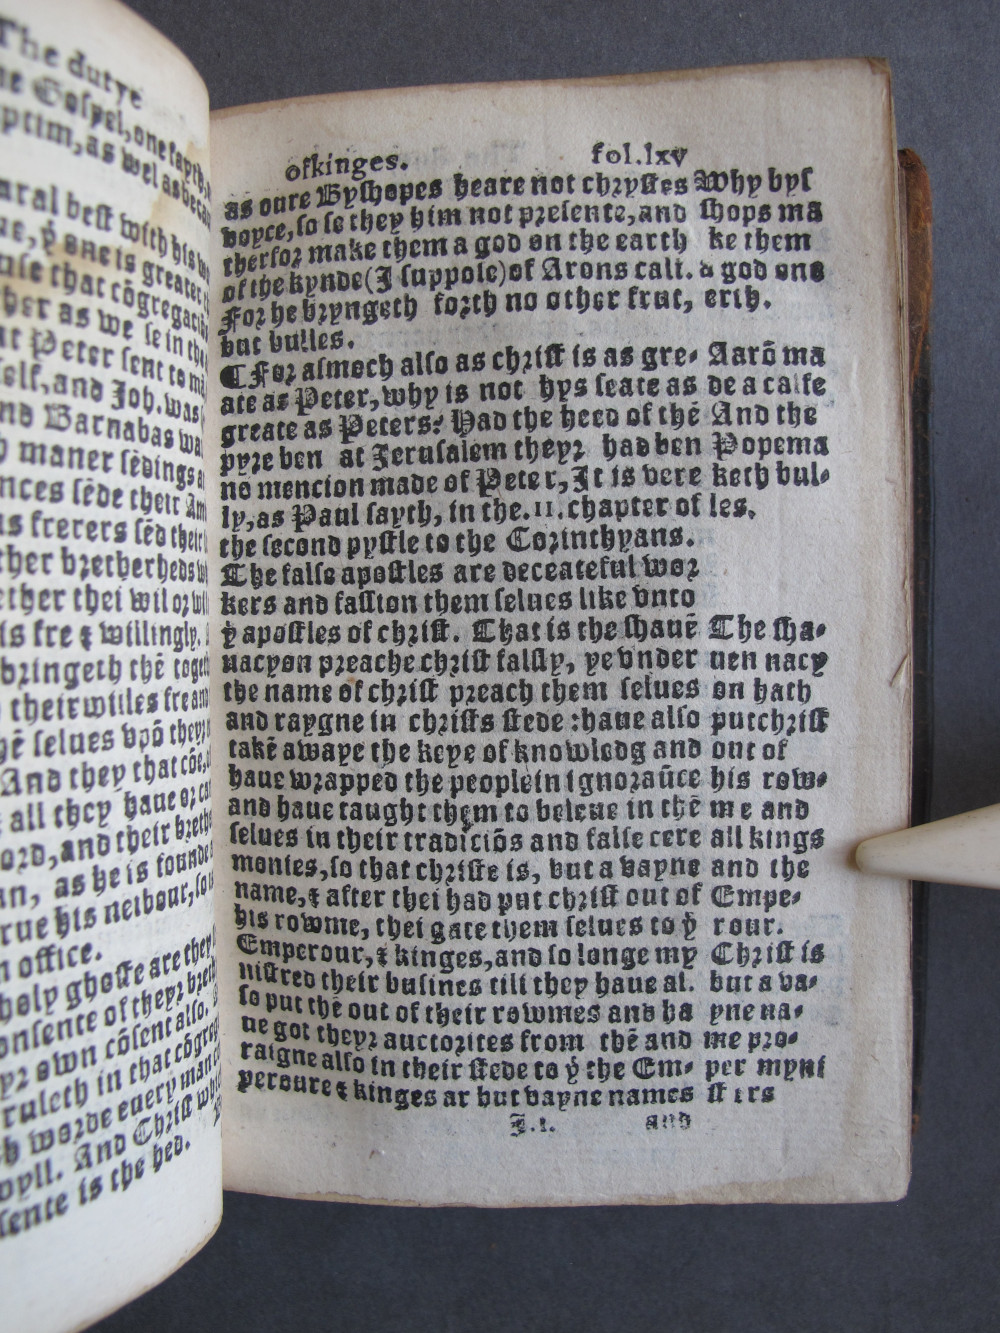 1 Folio I1 recto